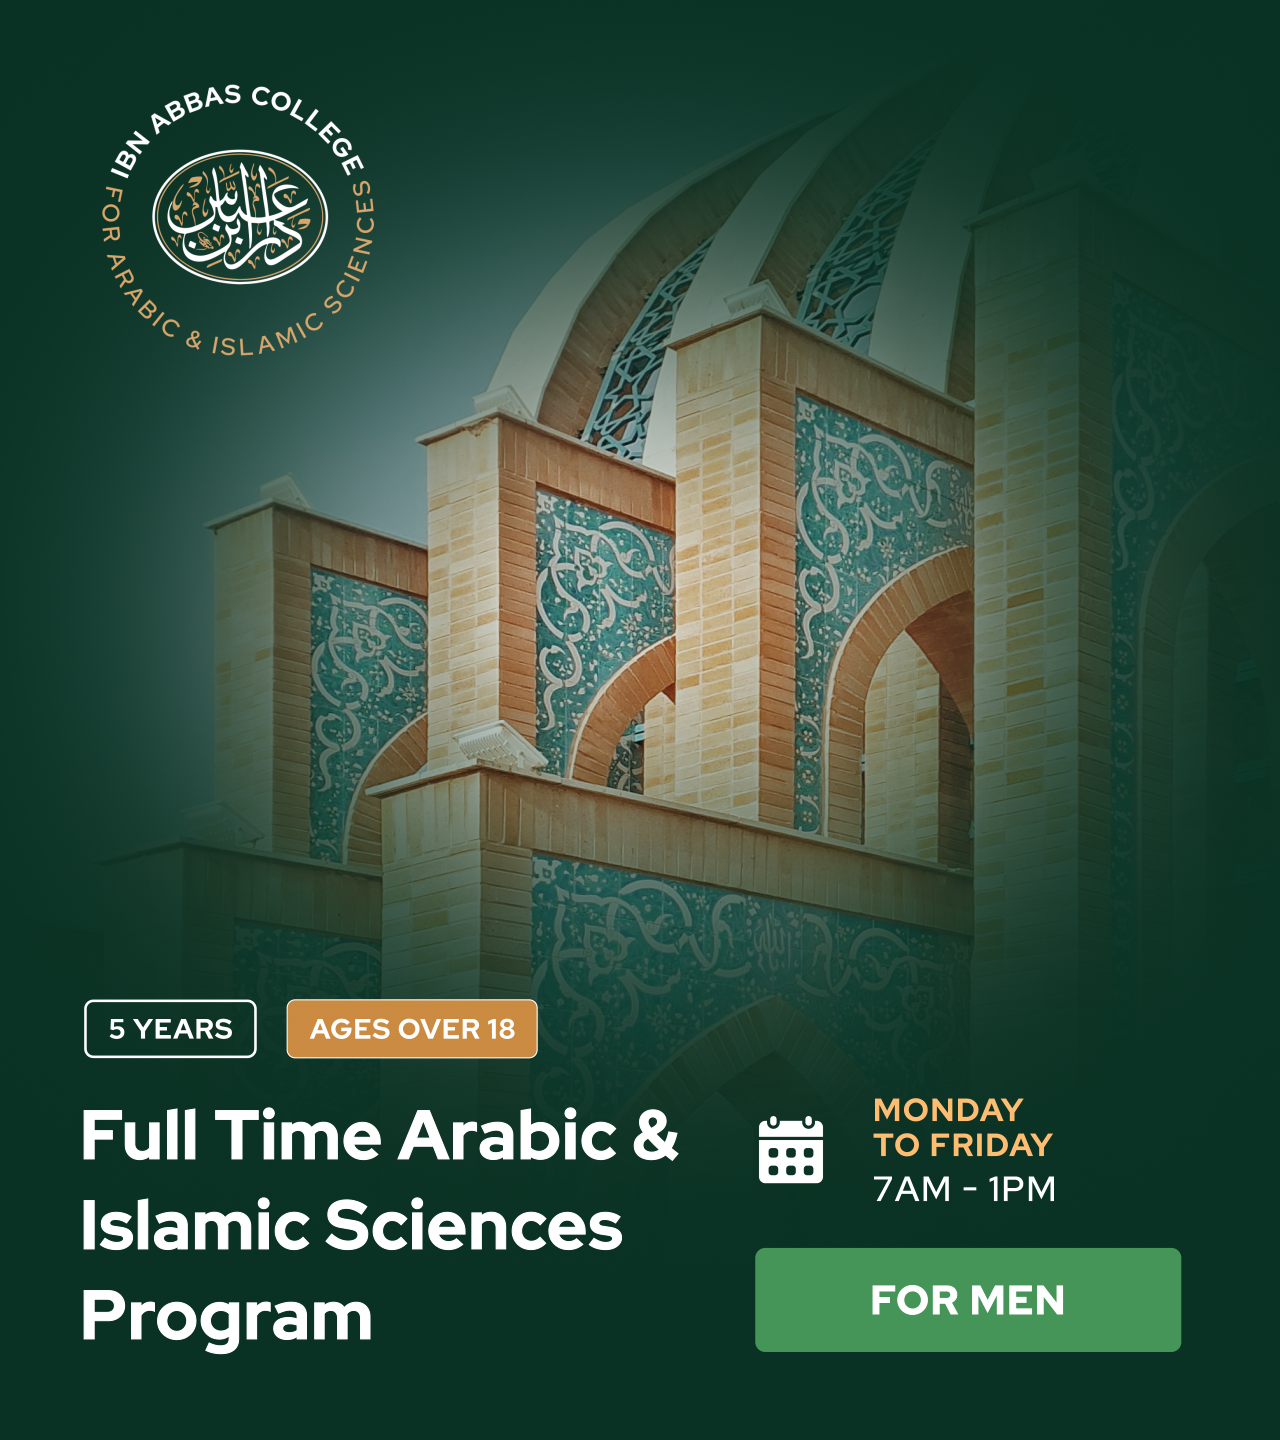 Full Time Arabic & Islamic Sciences Program